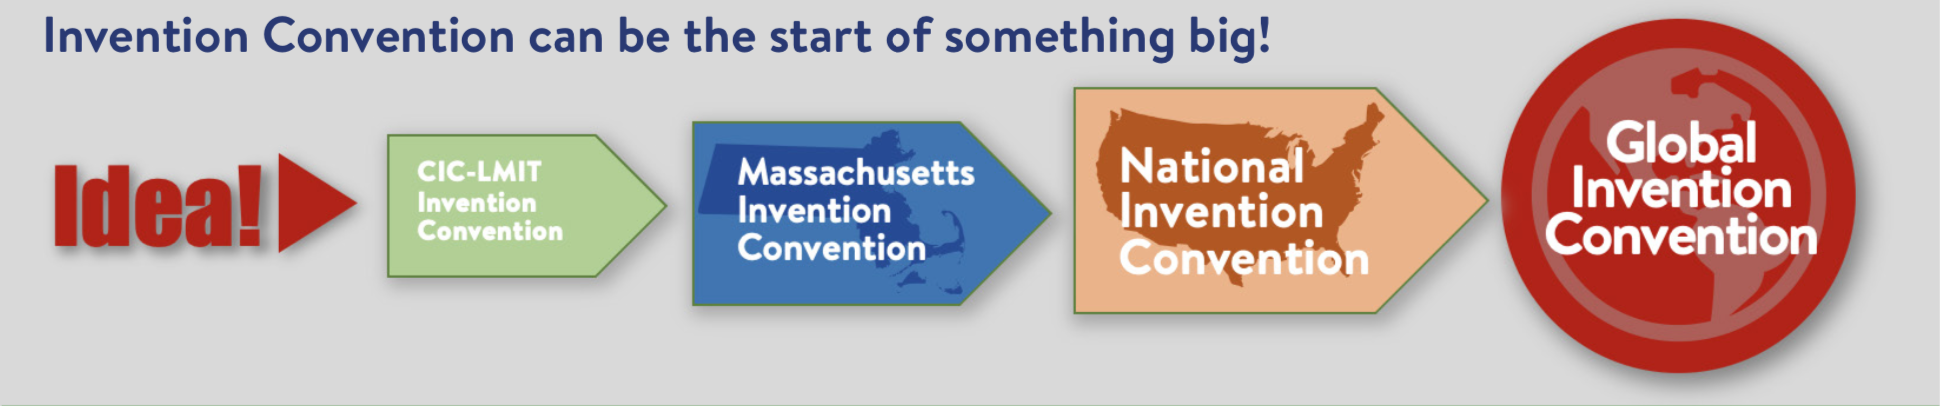 Idea! > CIC-LMIT Invention Convention > Massachusetts Invention Convention > National Invention Convention > Global Invention Convention